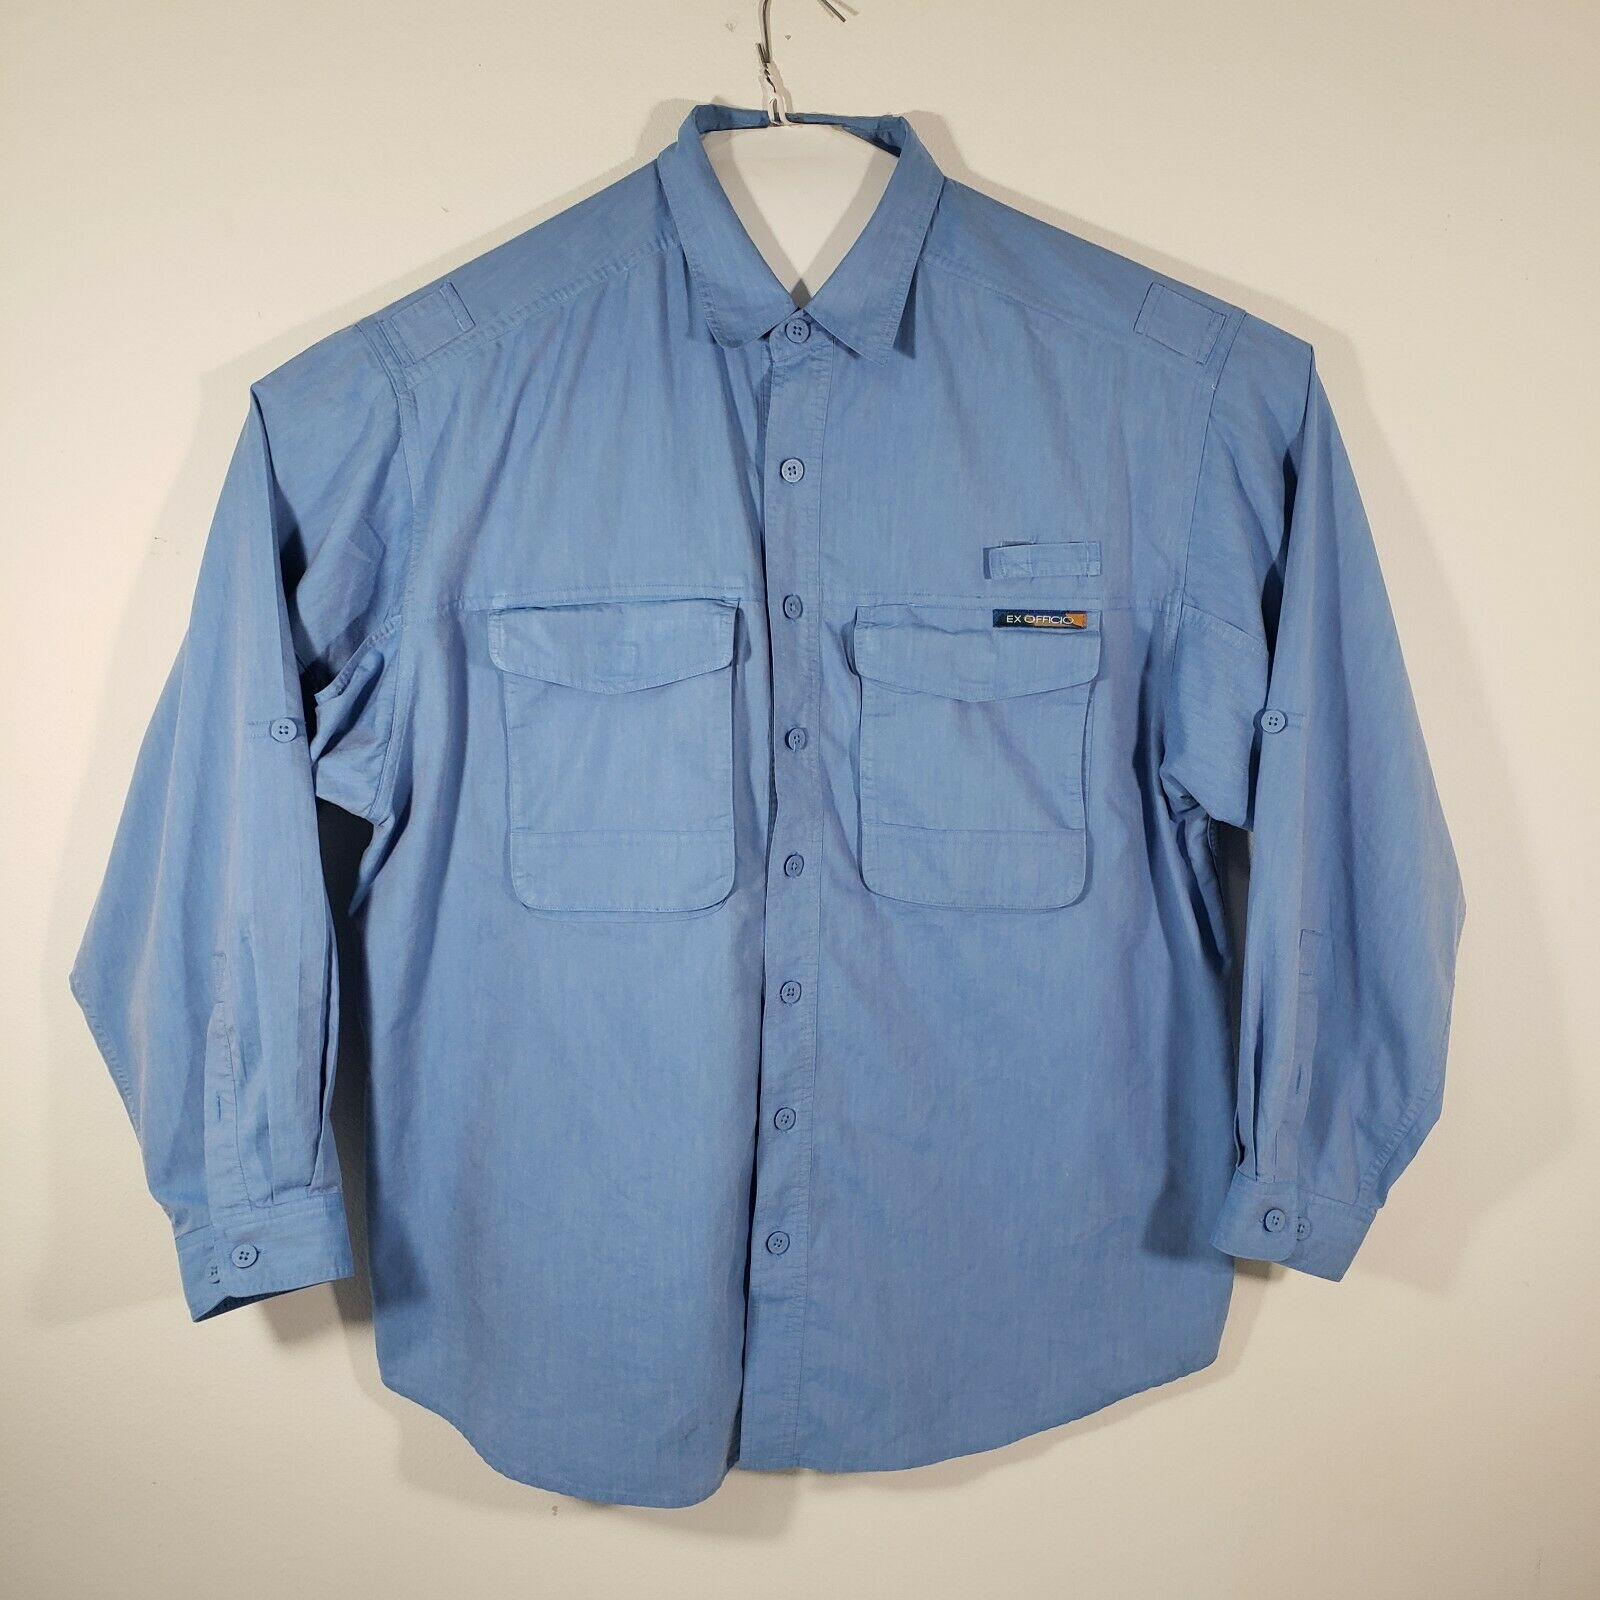 Exofficio Adventure Travel Men's Shirt Long Sleeve Cotton Blend Size 2xl Vented